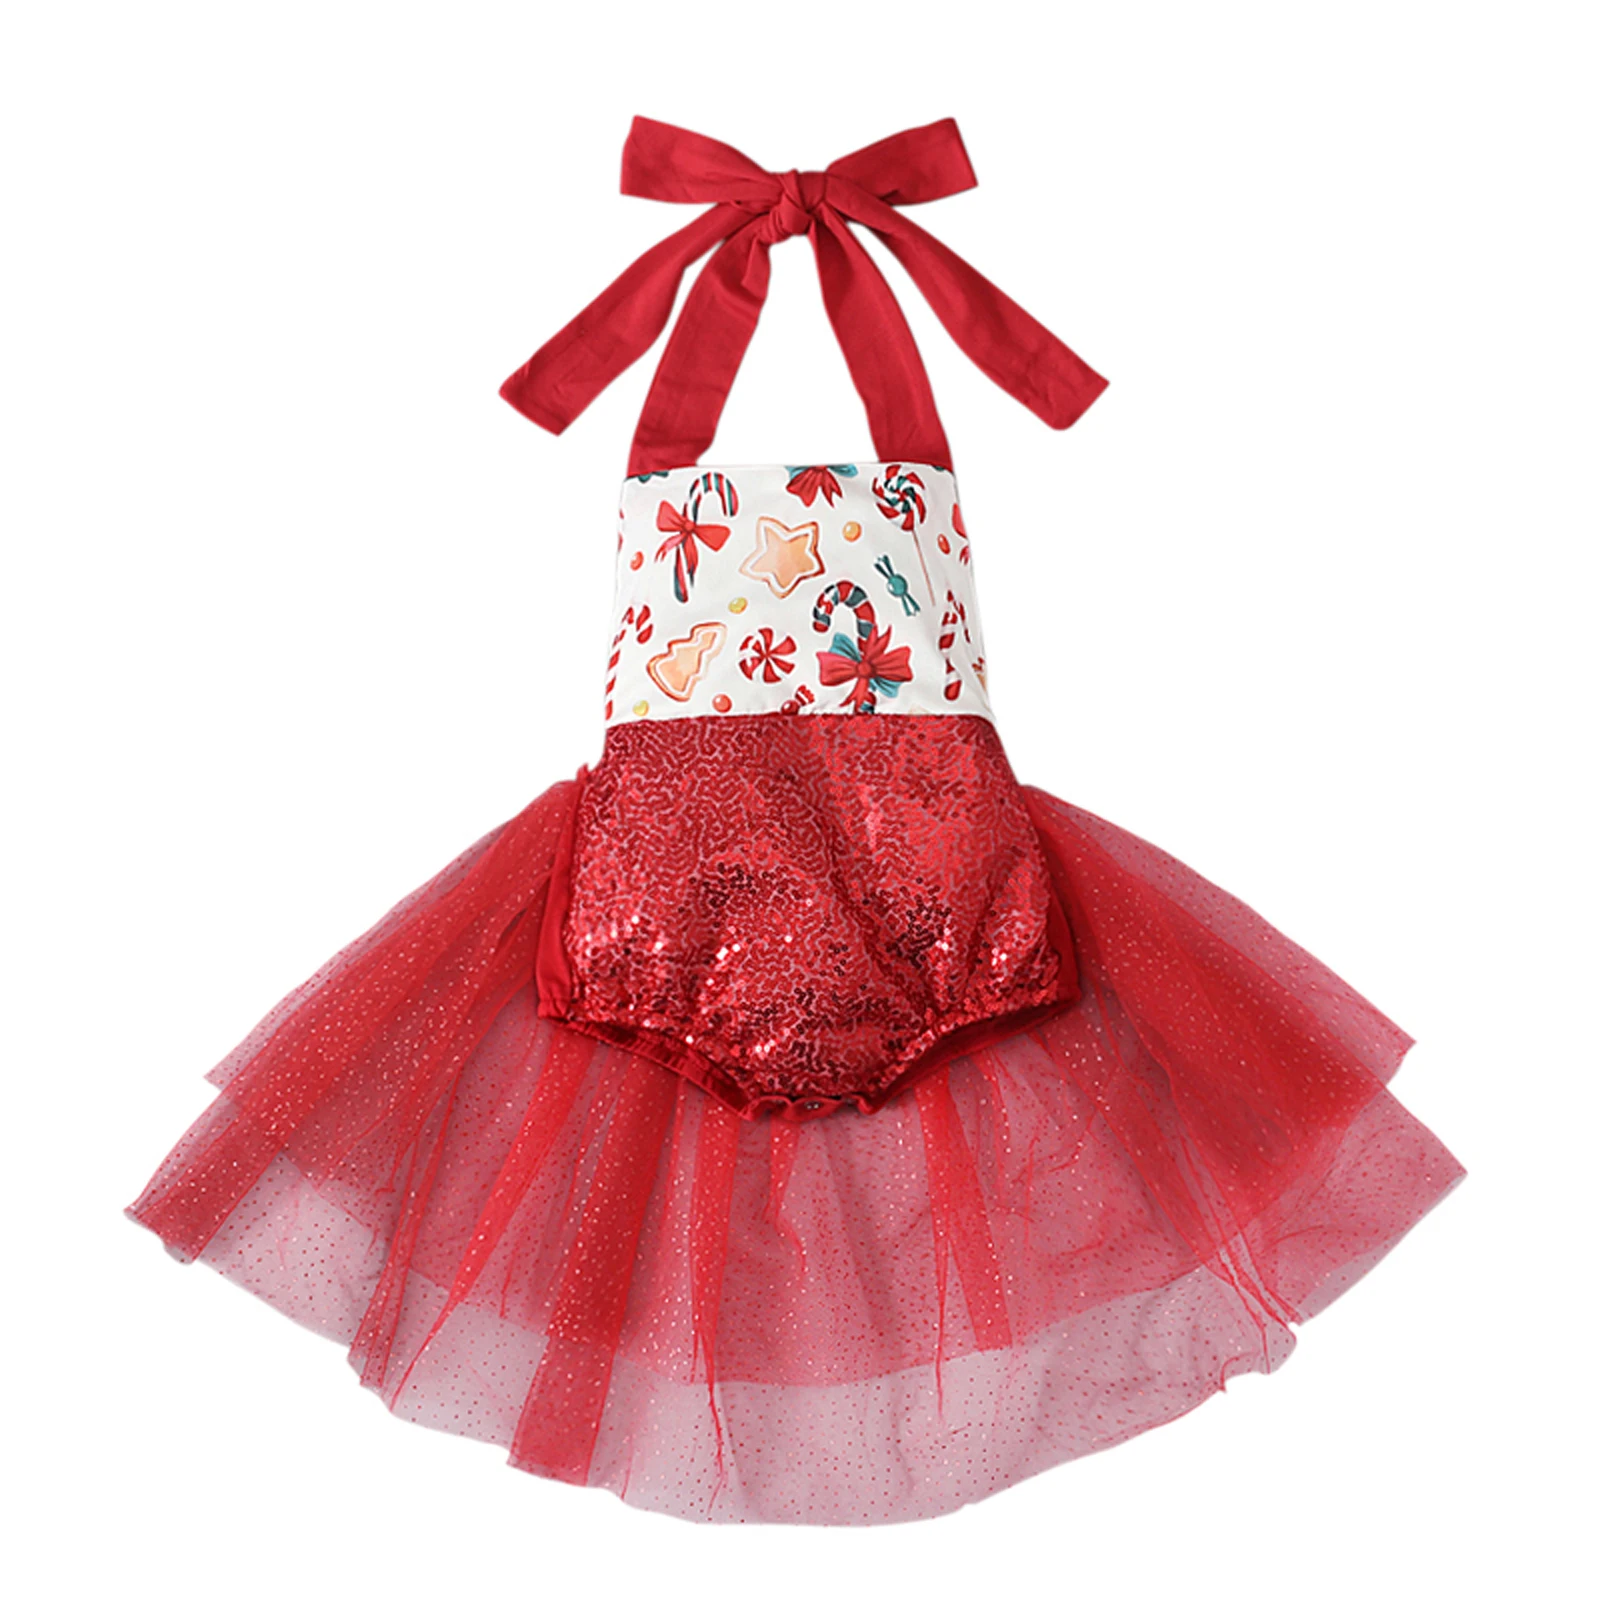 

Newborn Baby Girl Christmas Romper Dress Sequin Halter Tulle Tutu Bodysuit Skirt Princess Outfit Xmas Party Costume 0-24M